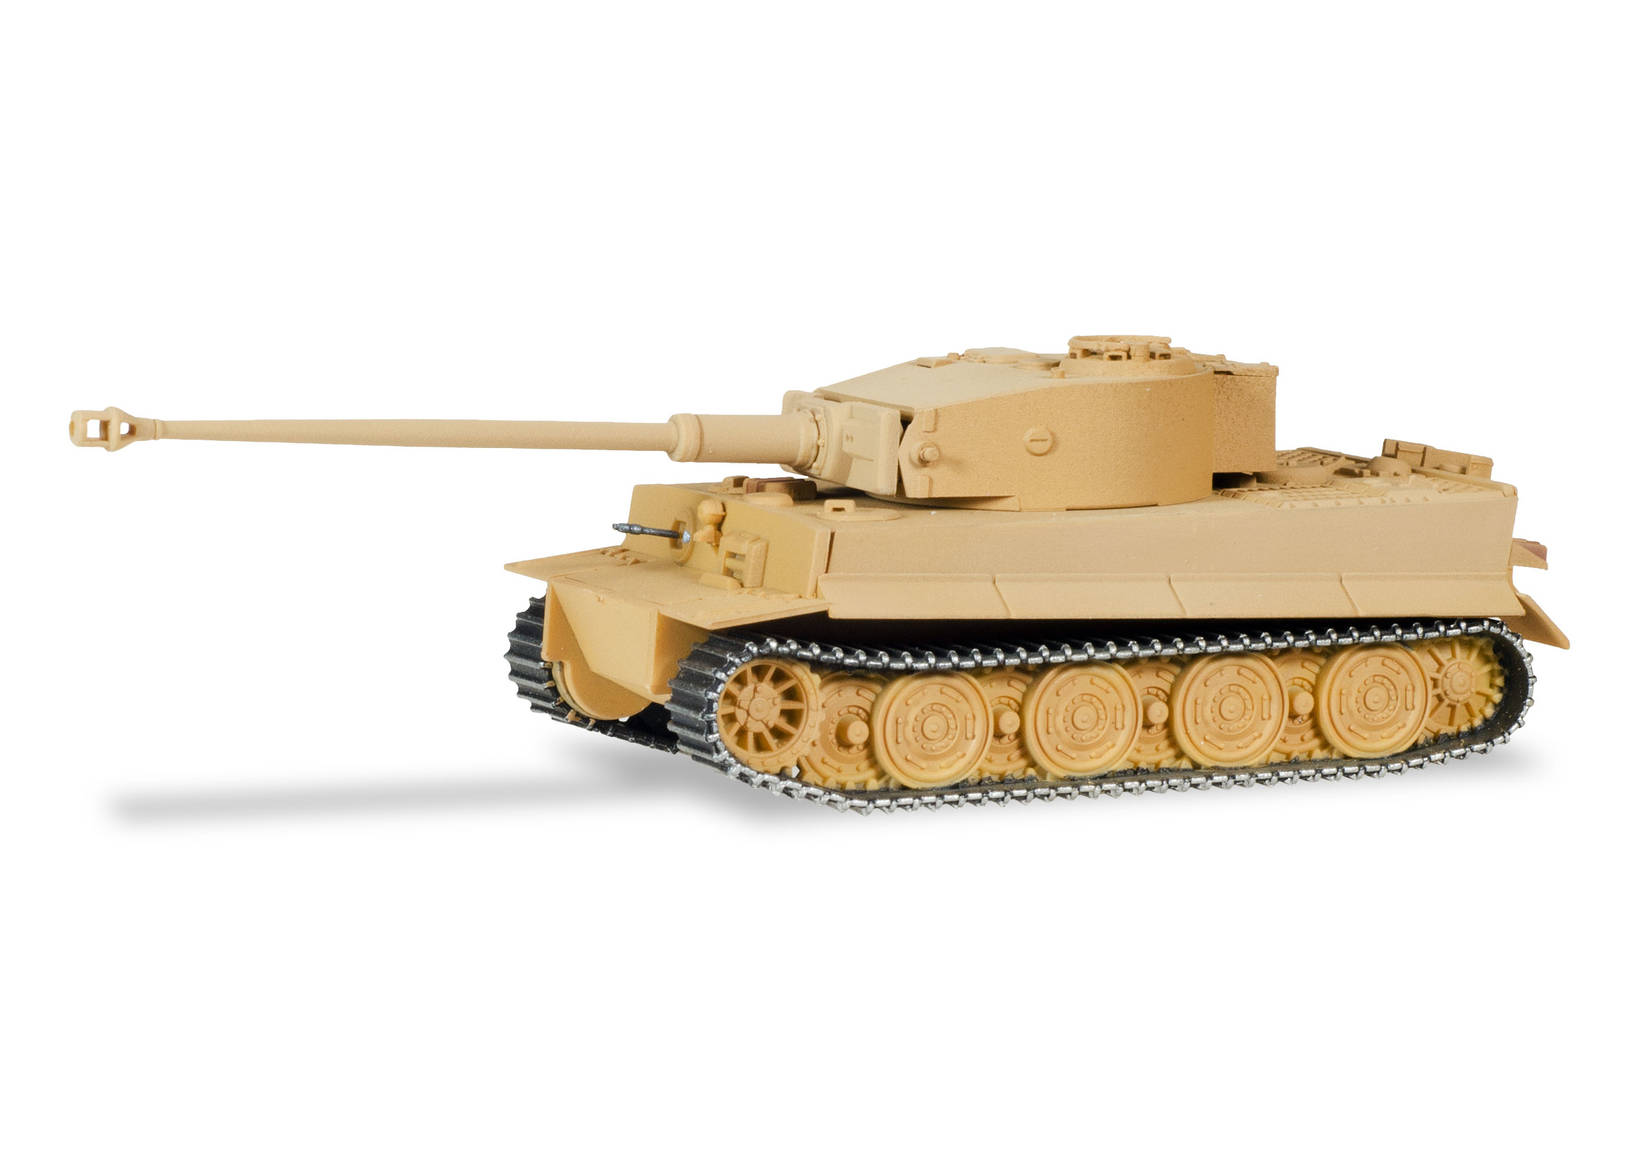 Battle tank "Tiger", version E with 88 mm cannon, 43 L/71, autumn 1943